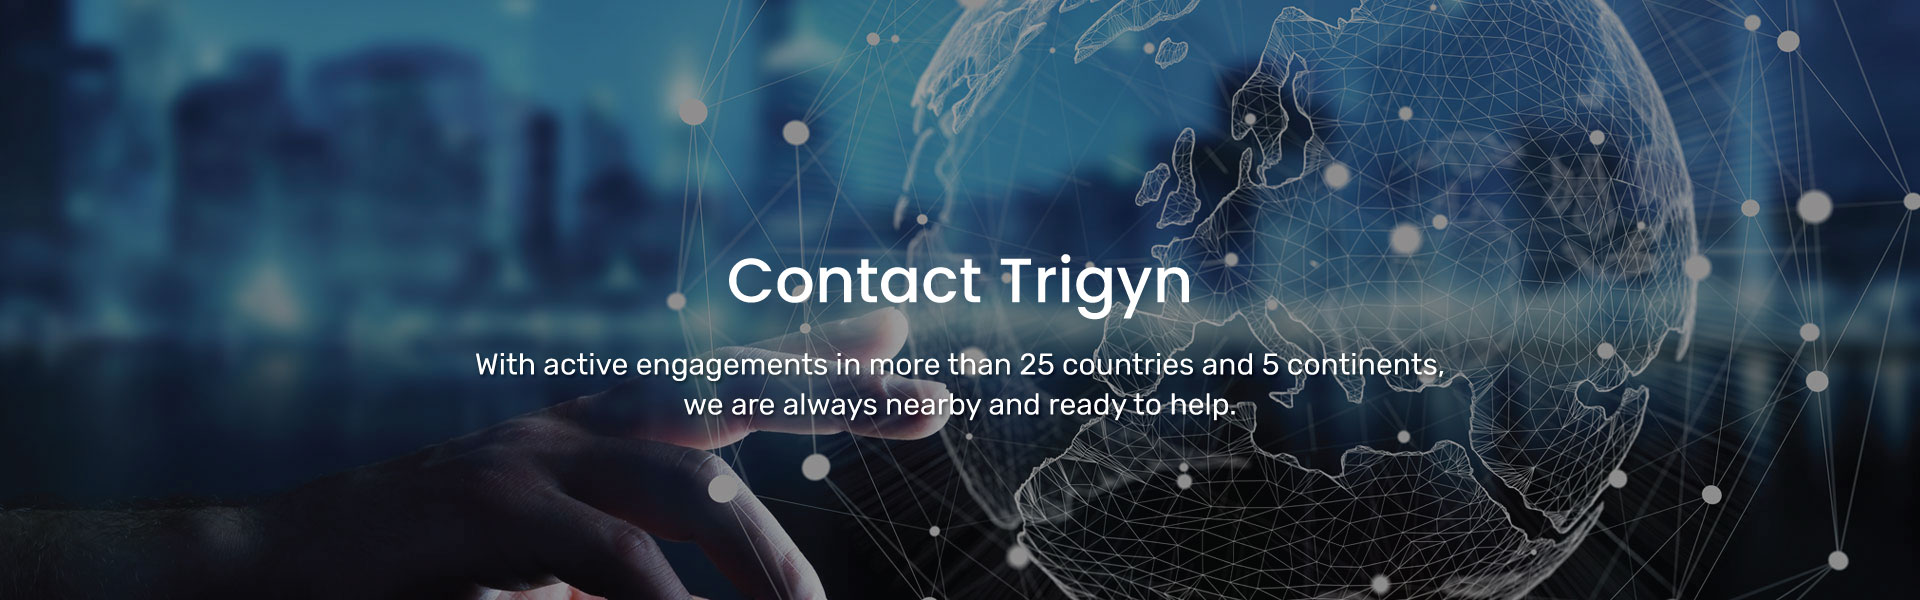 Contact Trigyn